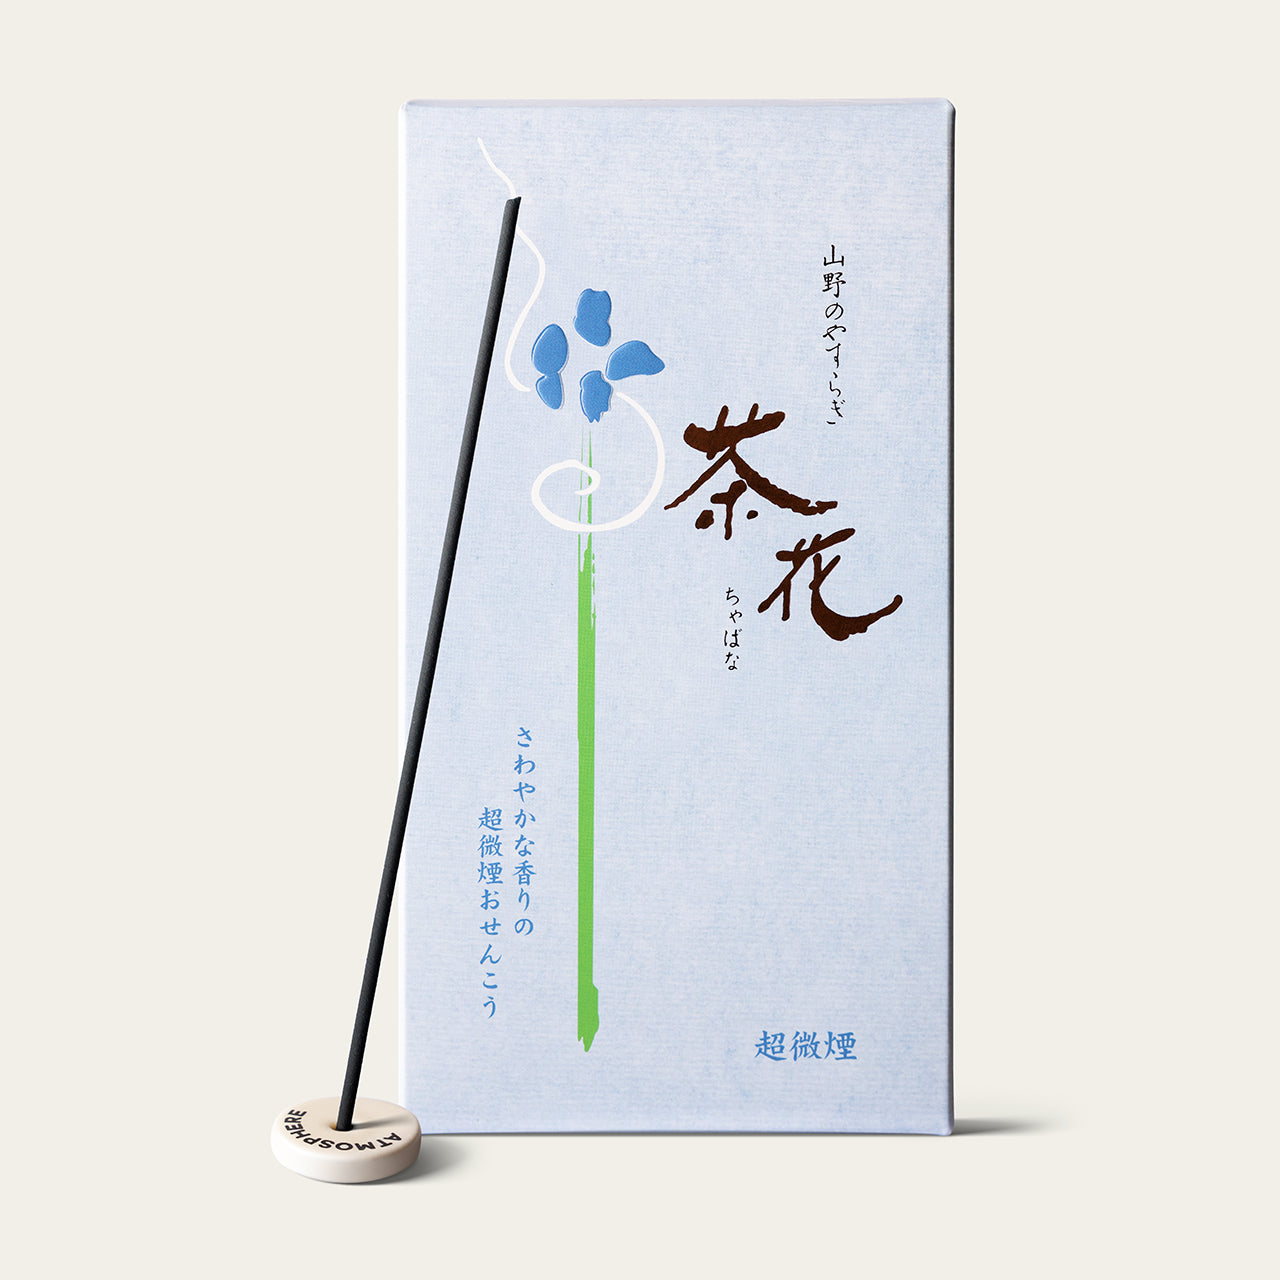 Shorindo Tea Flower Chabana Ultra Low Smoke Japanese incense sticks (150 sticks) with Atmosphere ceramic incense holder